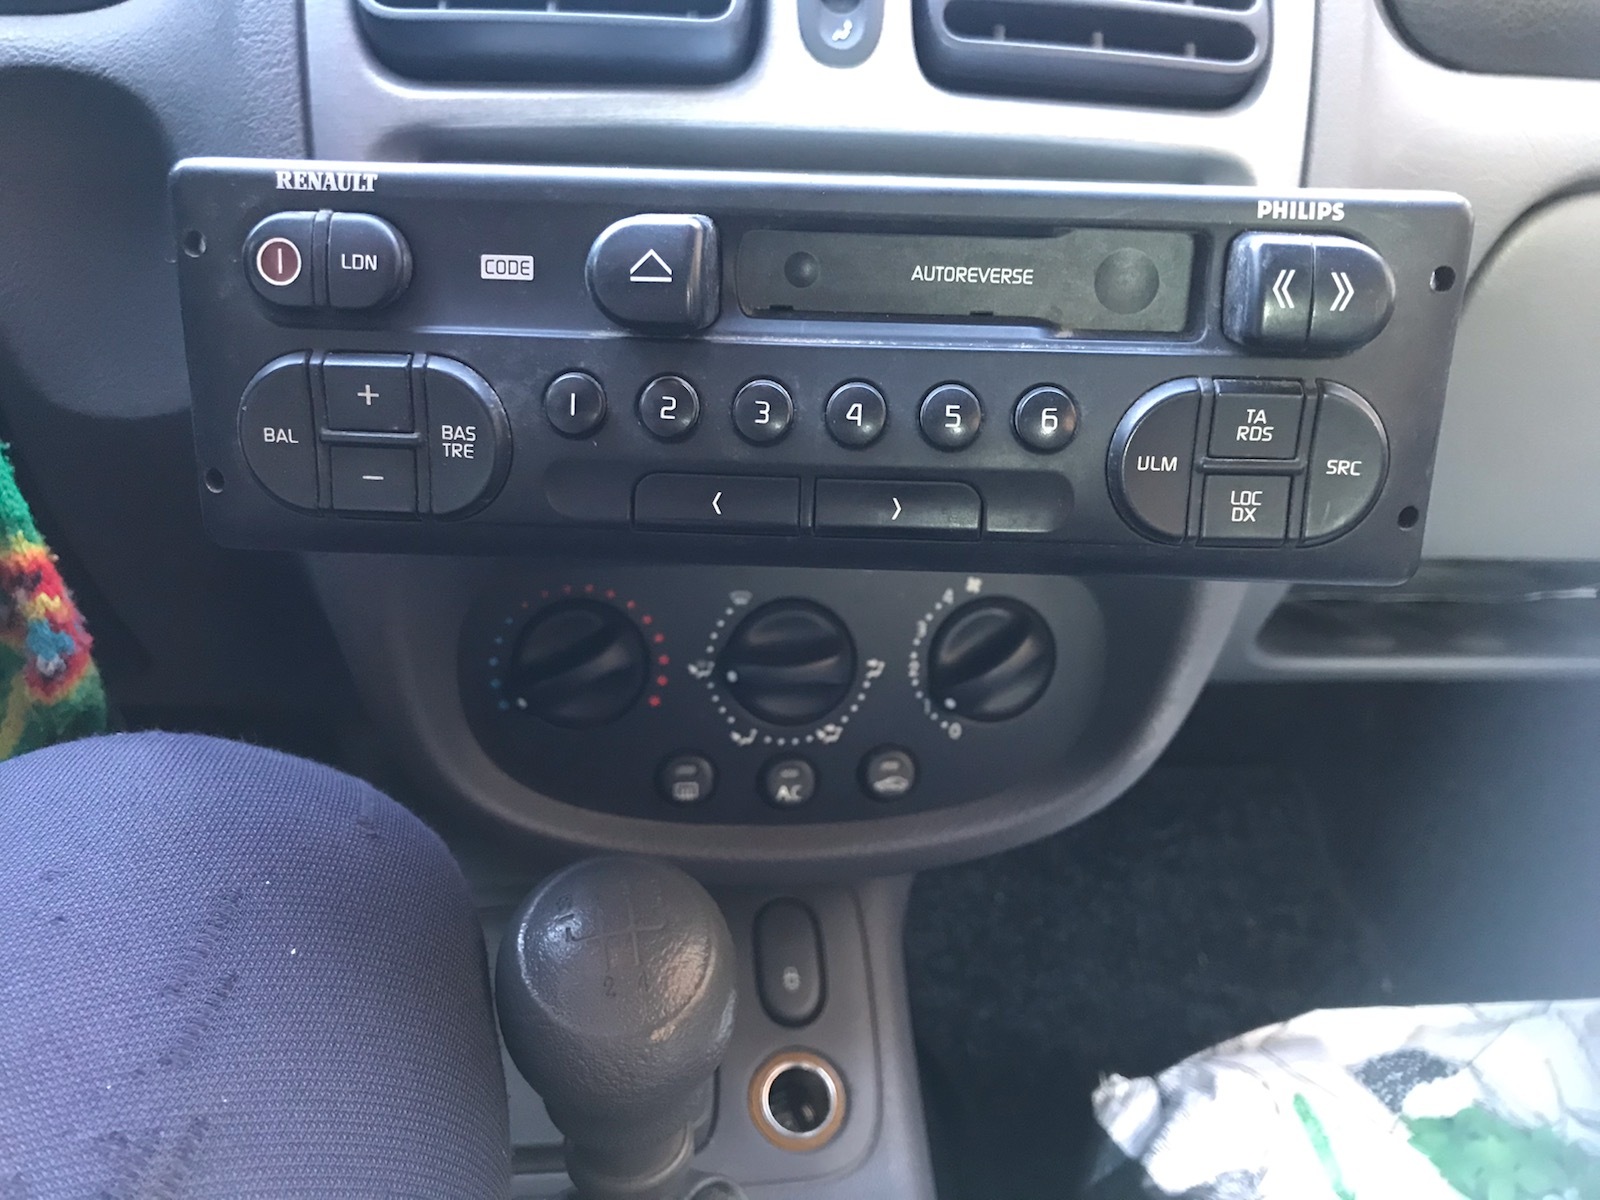 Code radio renault - Tlemcen Car electronics